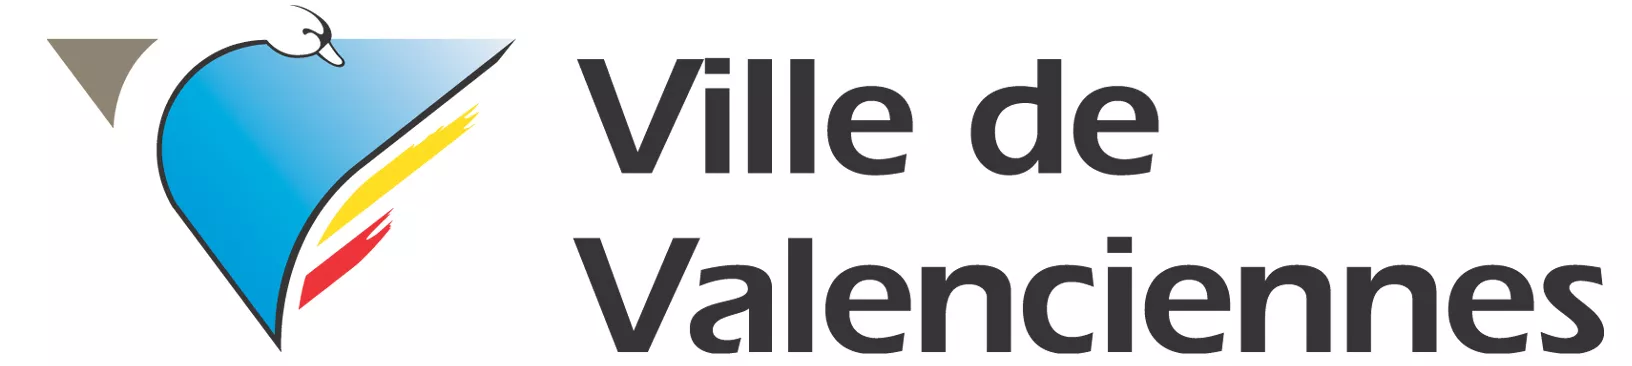 logo valenciennes